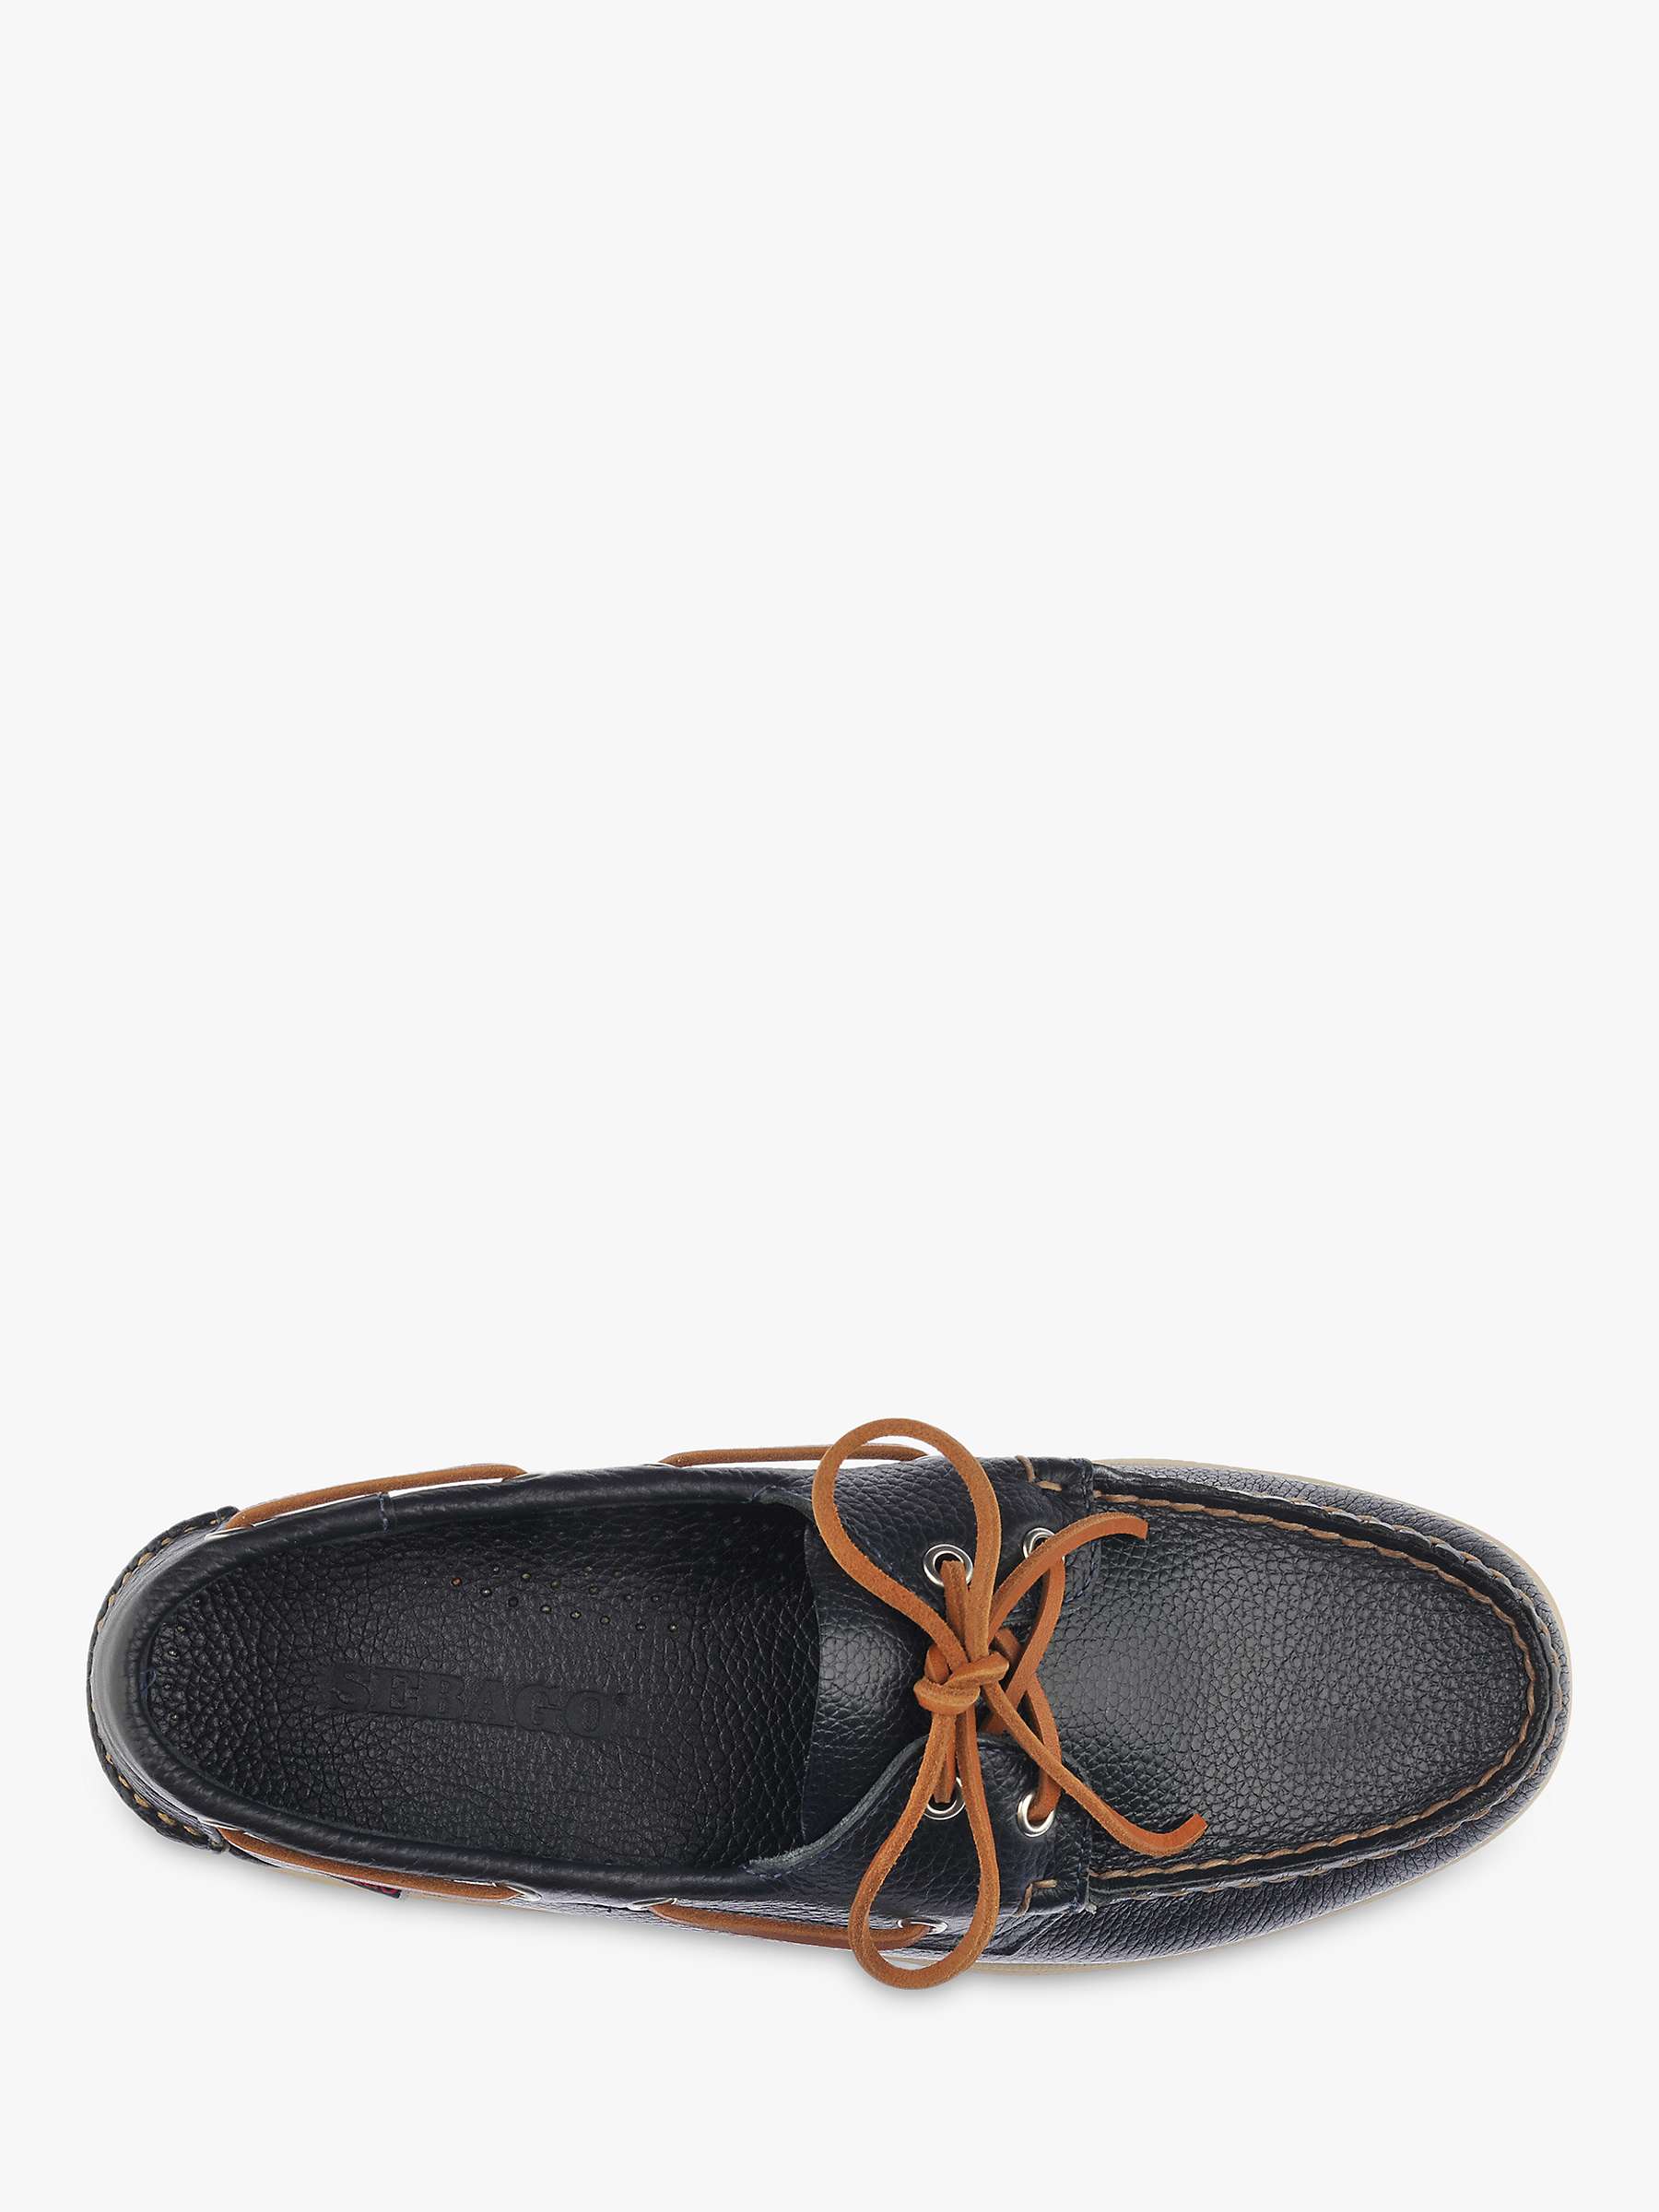 Buy Sebago Portland Martellato Leather Boat Shoes Online at johnlewis.com